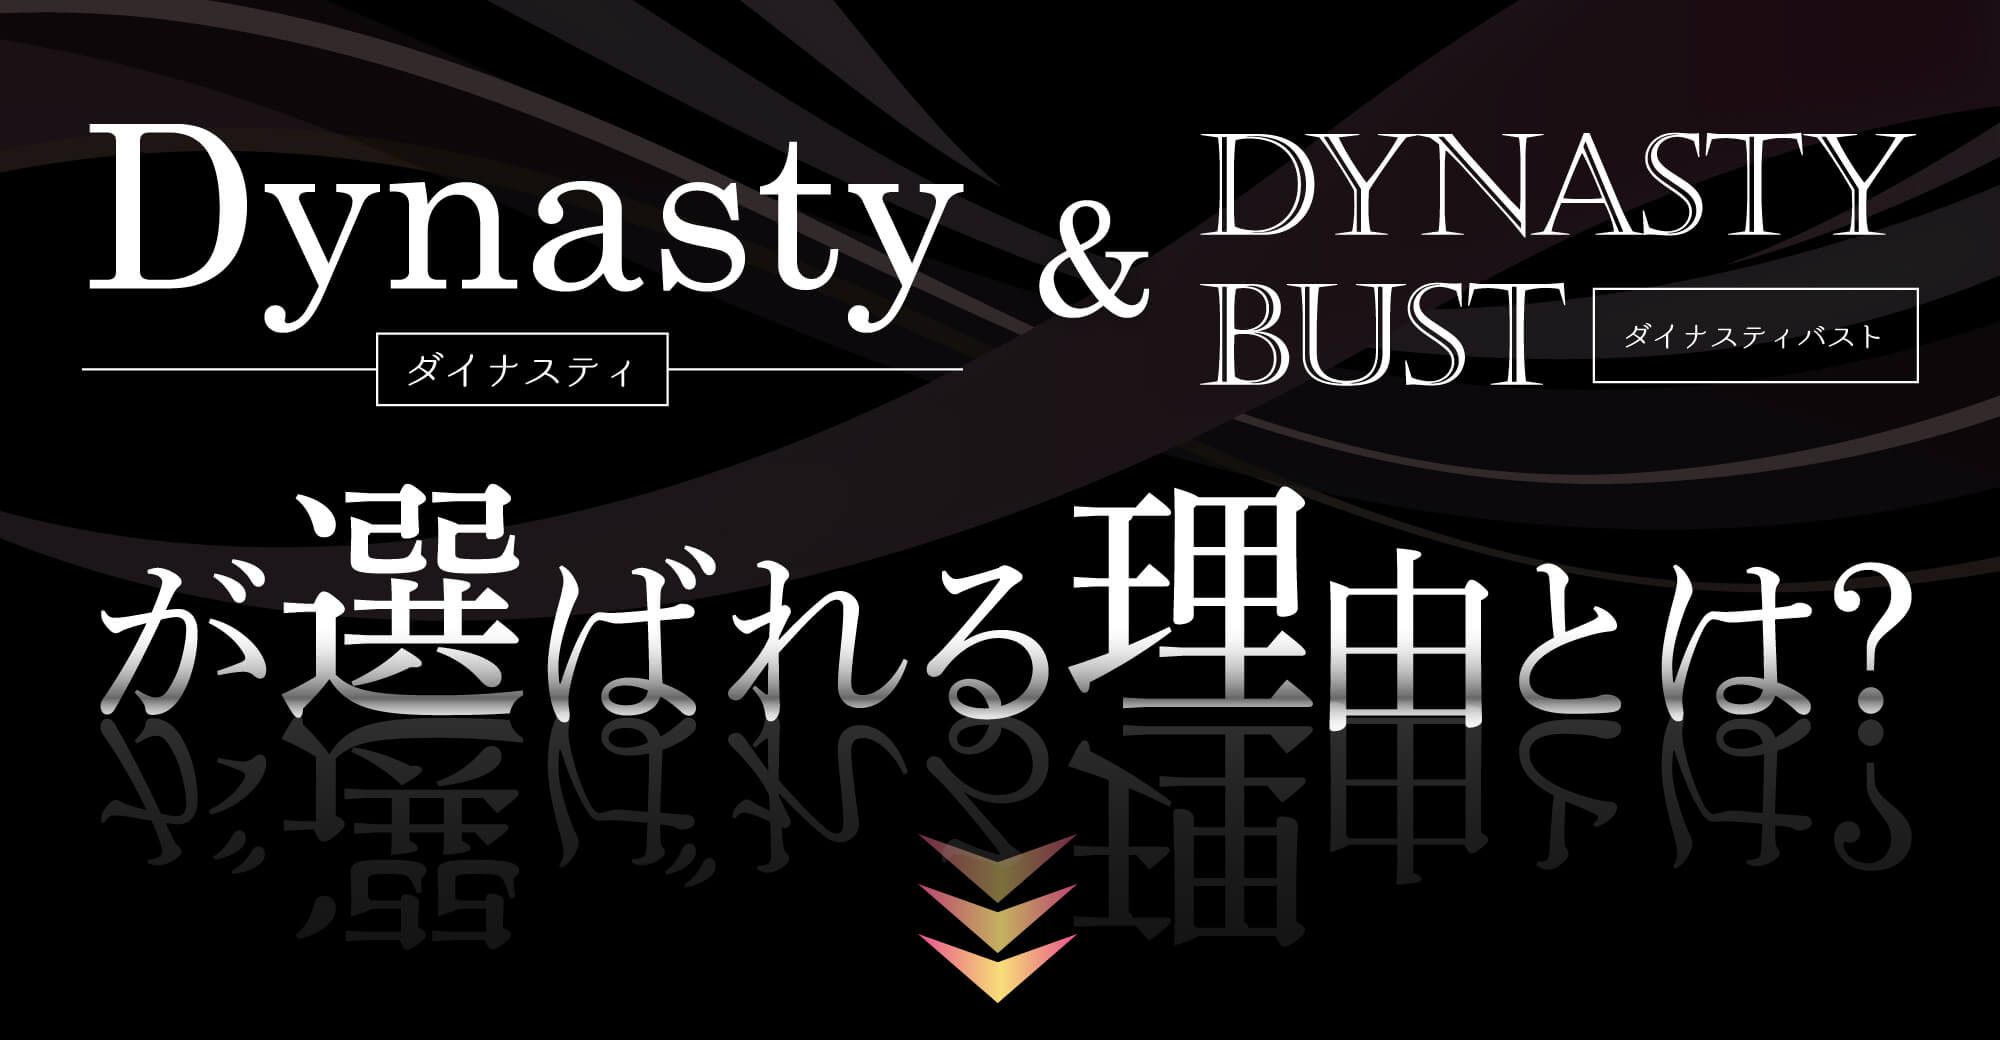 Dynasty（ダイナスティ）＆DYNASTY BUST（ダイナスティバスト）が選ばれる理由とは？